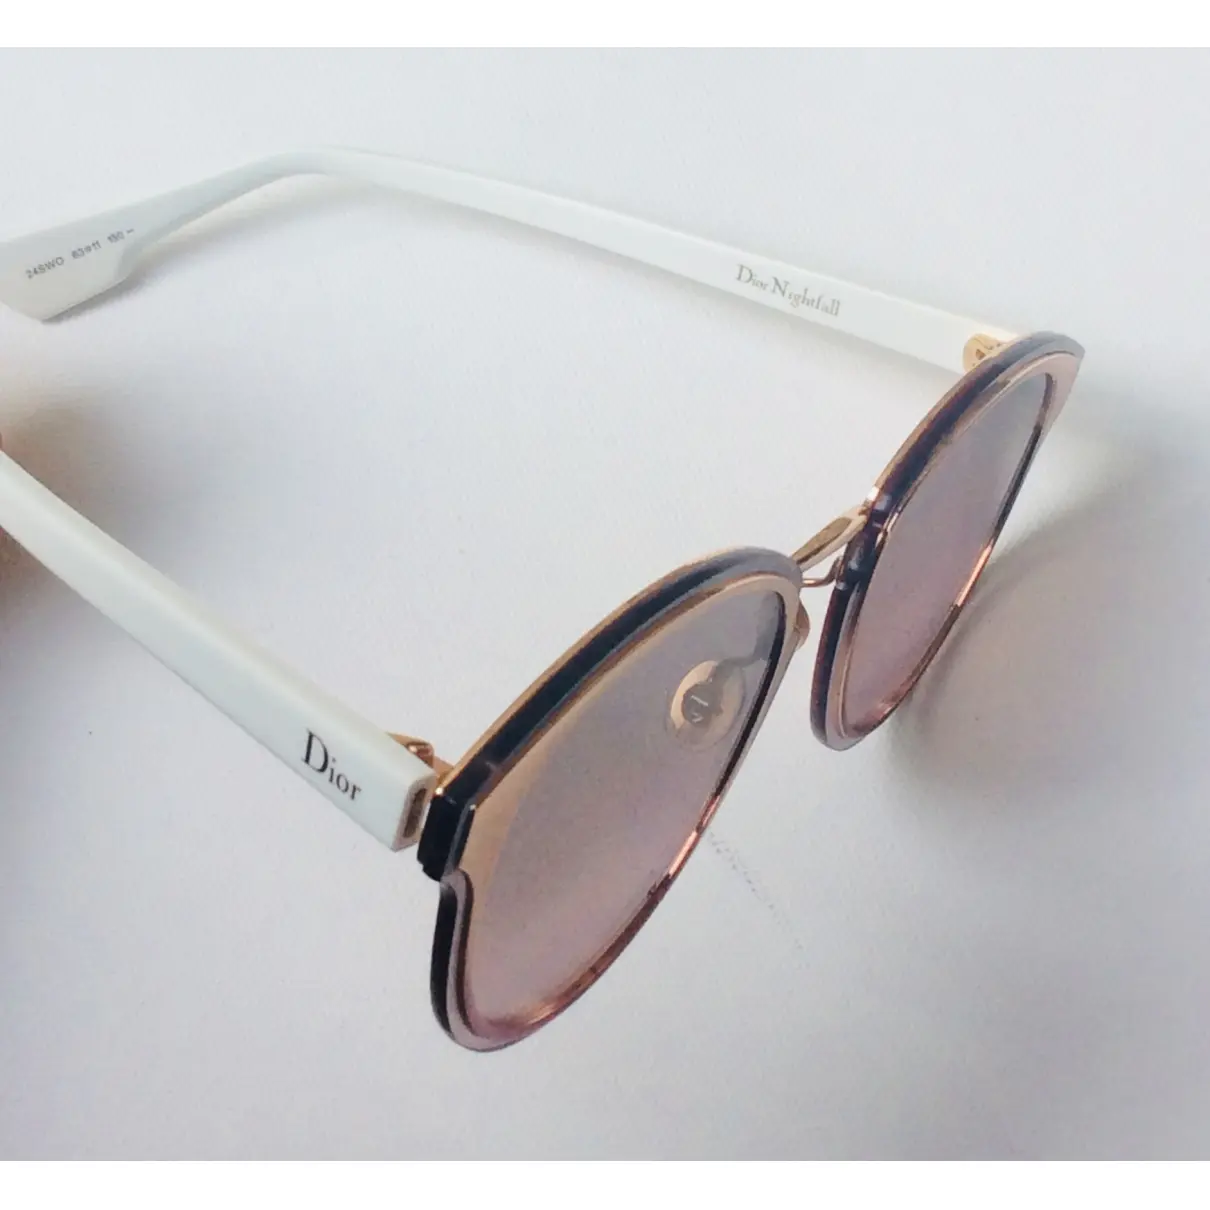 Buy Dior Nightfall sunglasses online